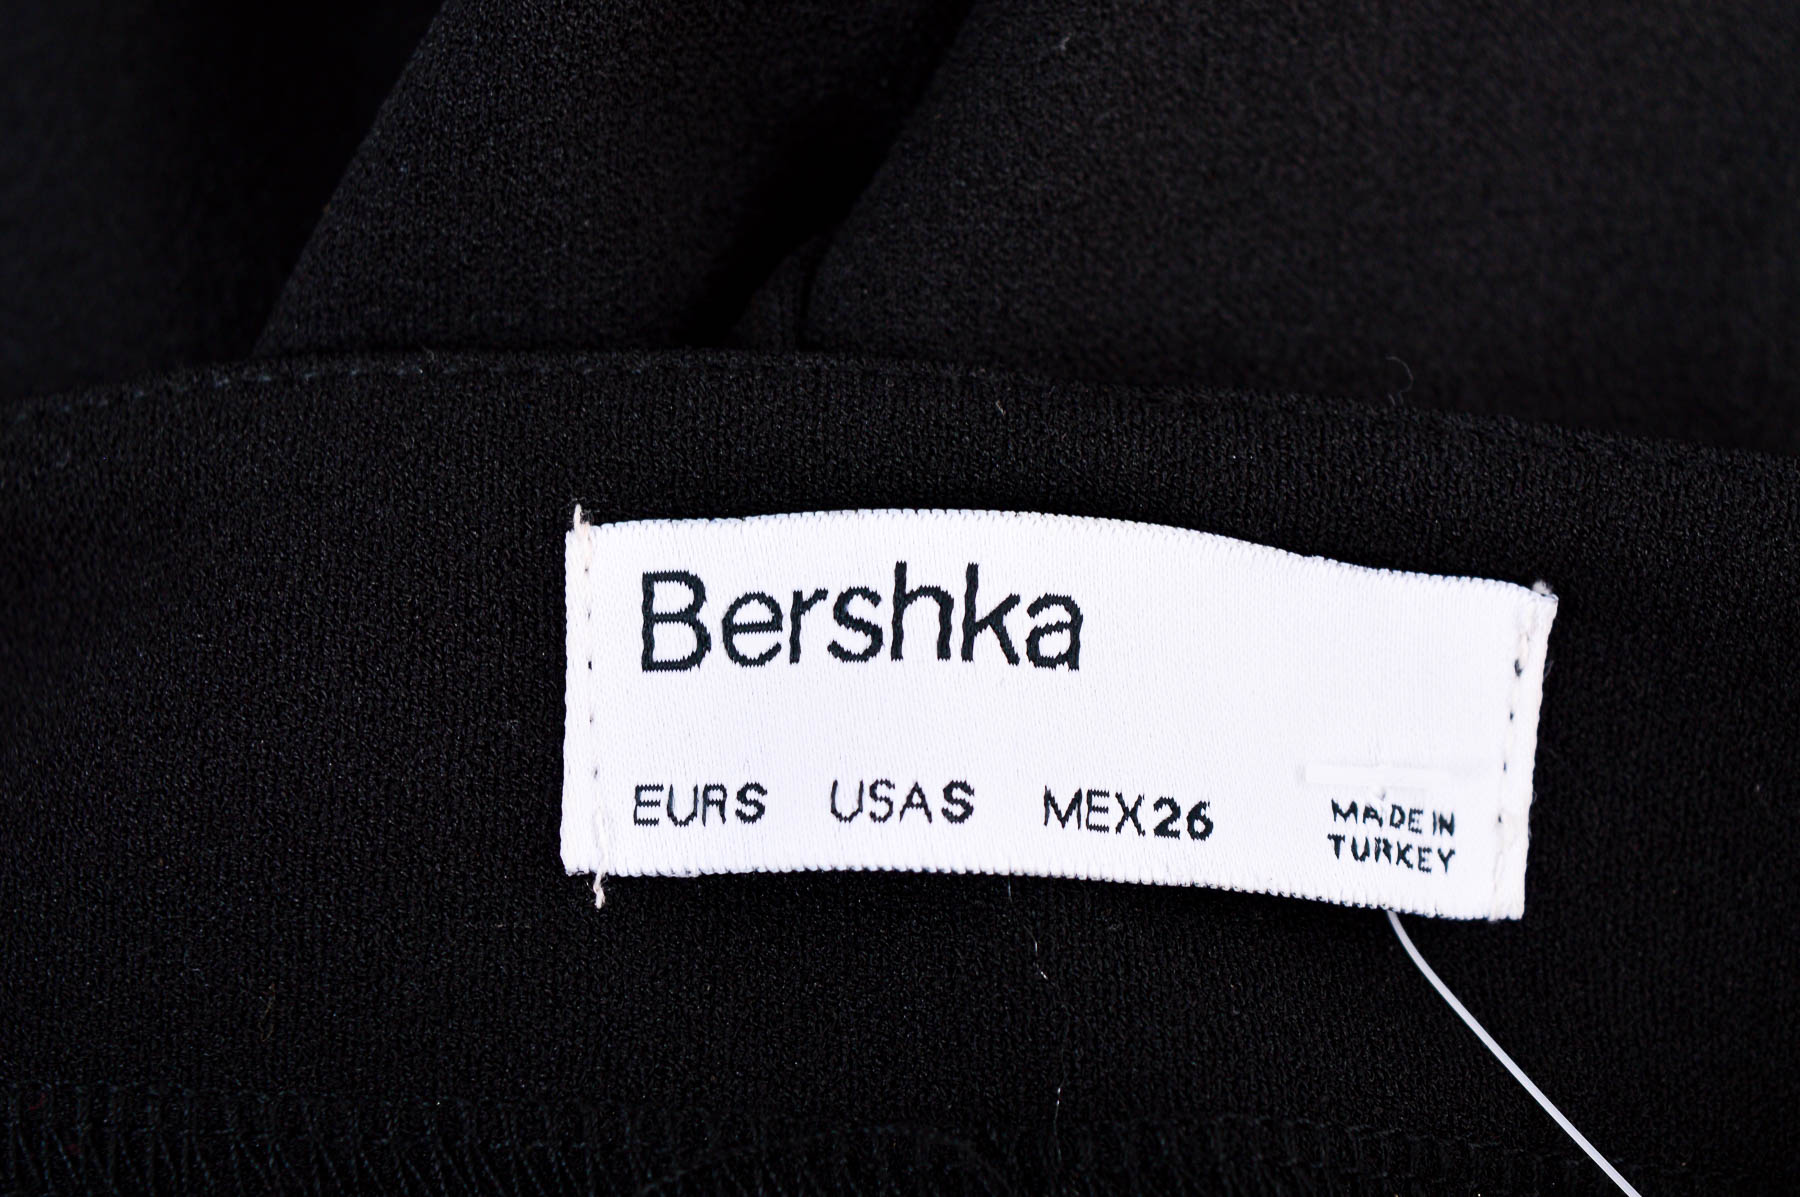 Women's trousers - Bershka - 2